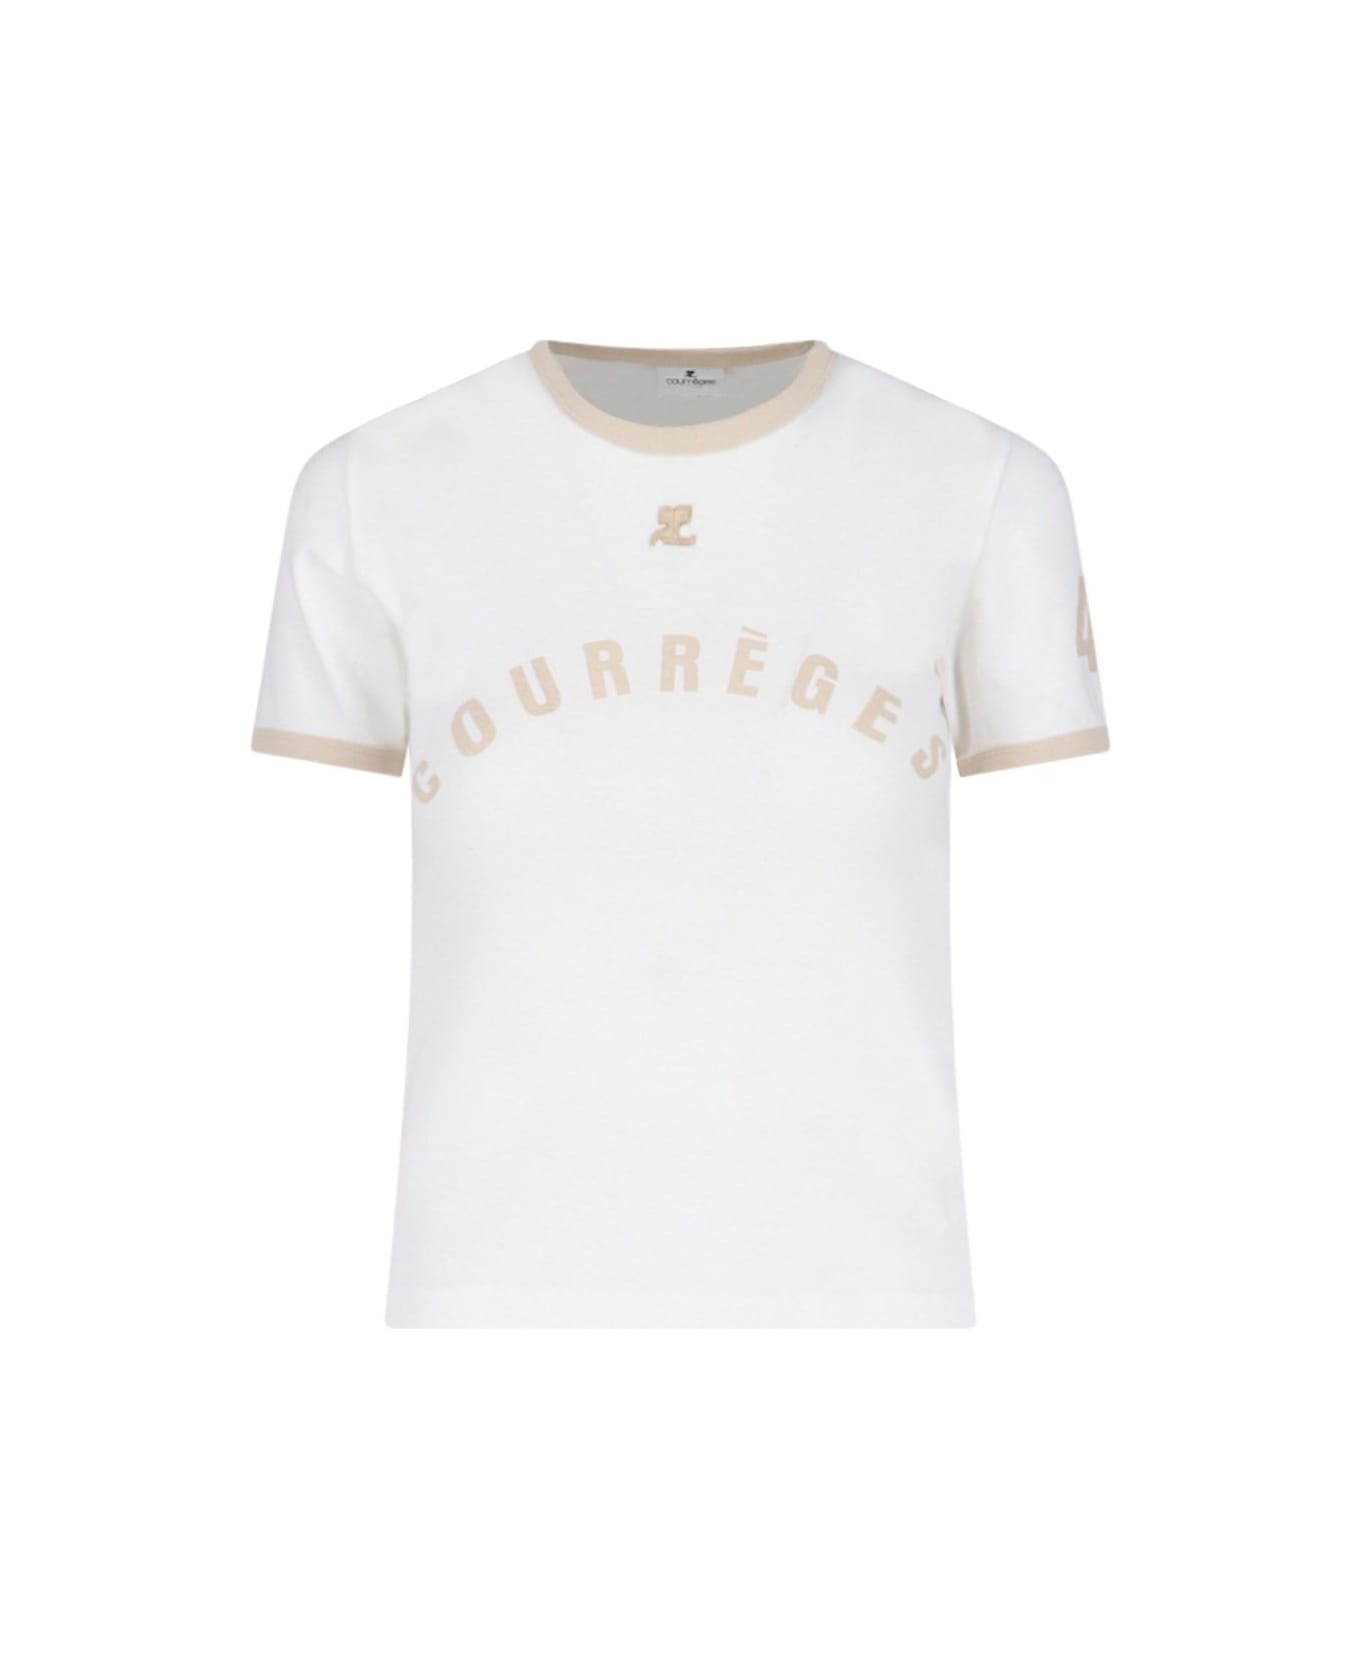 Courrèges Logo T-shirt - White Oatmeal Tシャツ